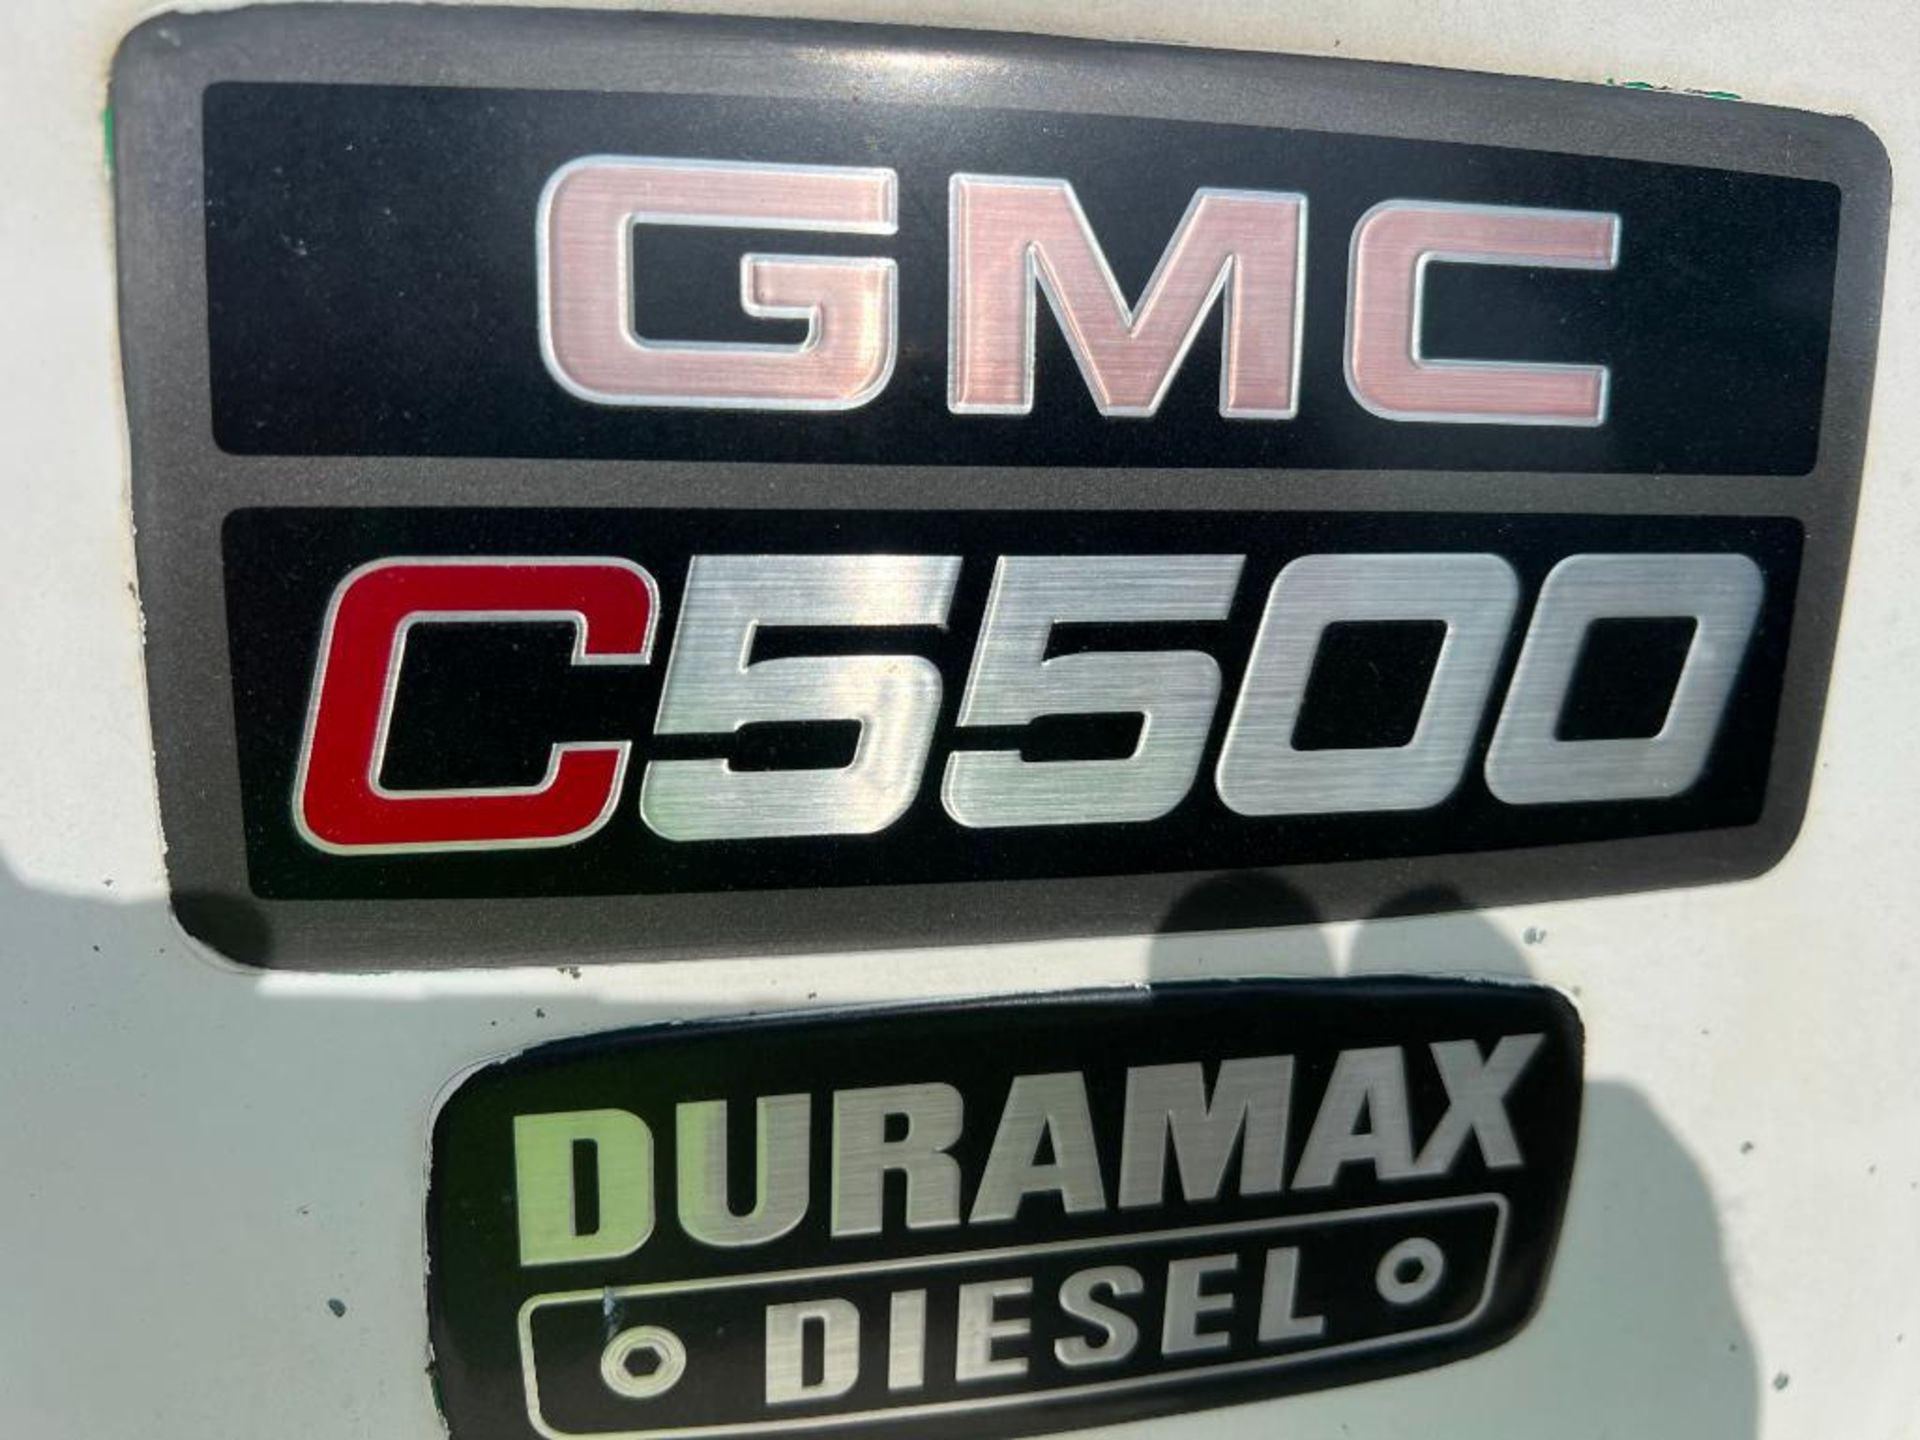 2007 GMC C5500 Duramax Diesel Utility Truck, VIN #1GDE5C1917F421363, Miles 174,389, Automatic Transm - Image 13 of 30